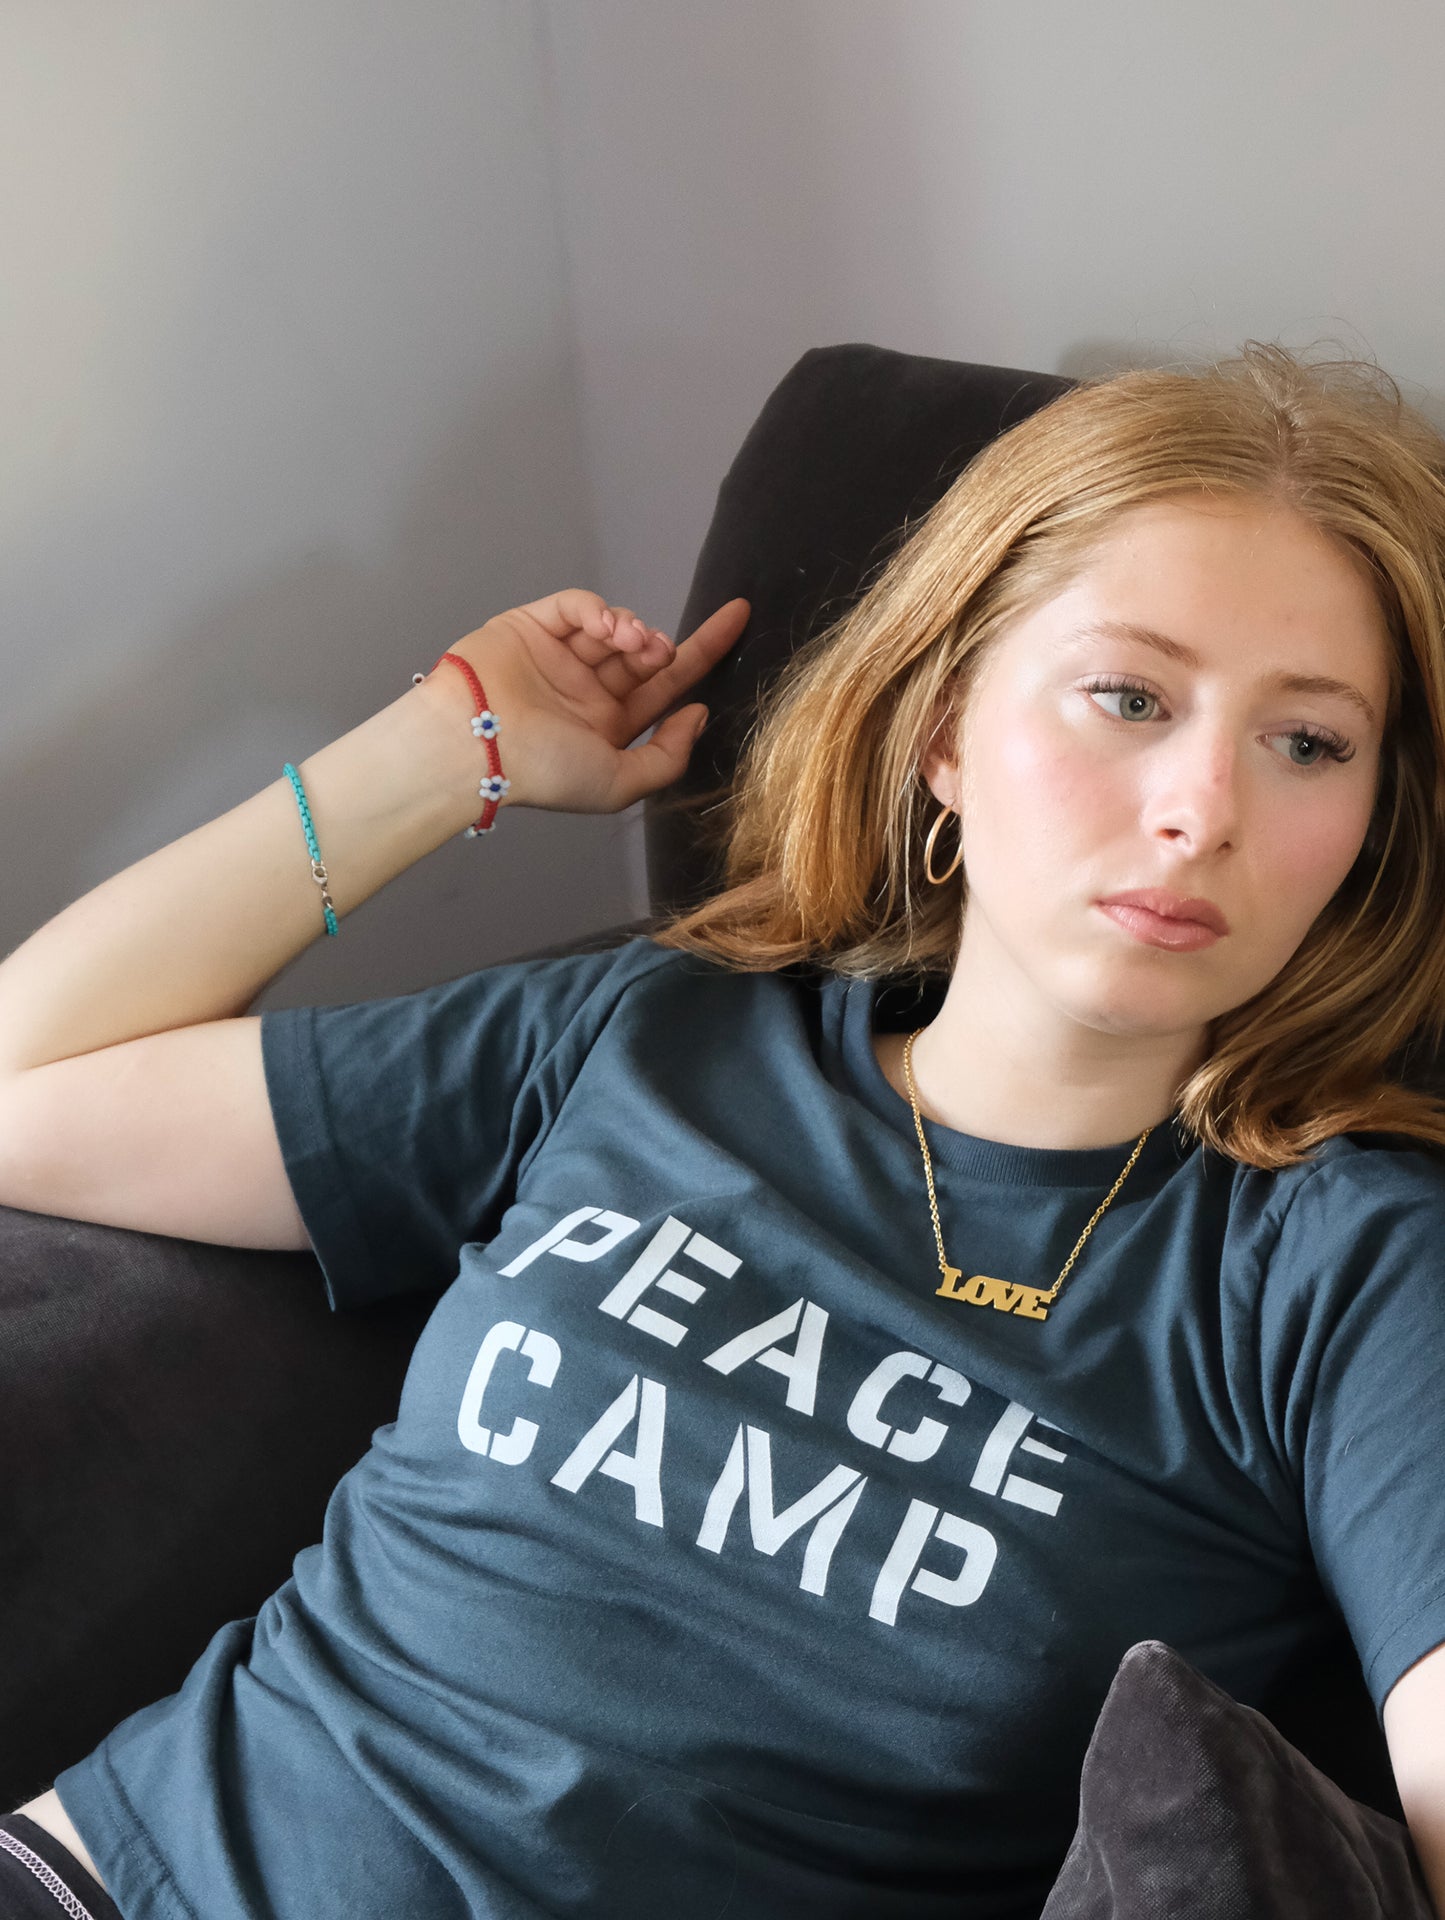 Peace camp printed t-shirt on black organic cotton